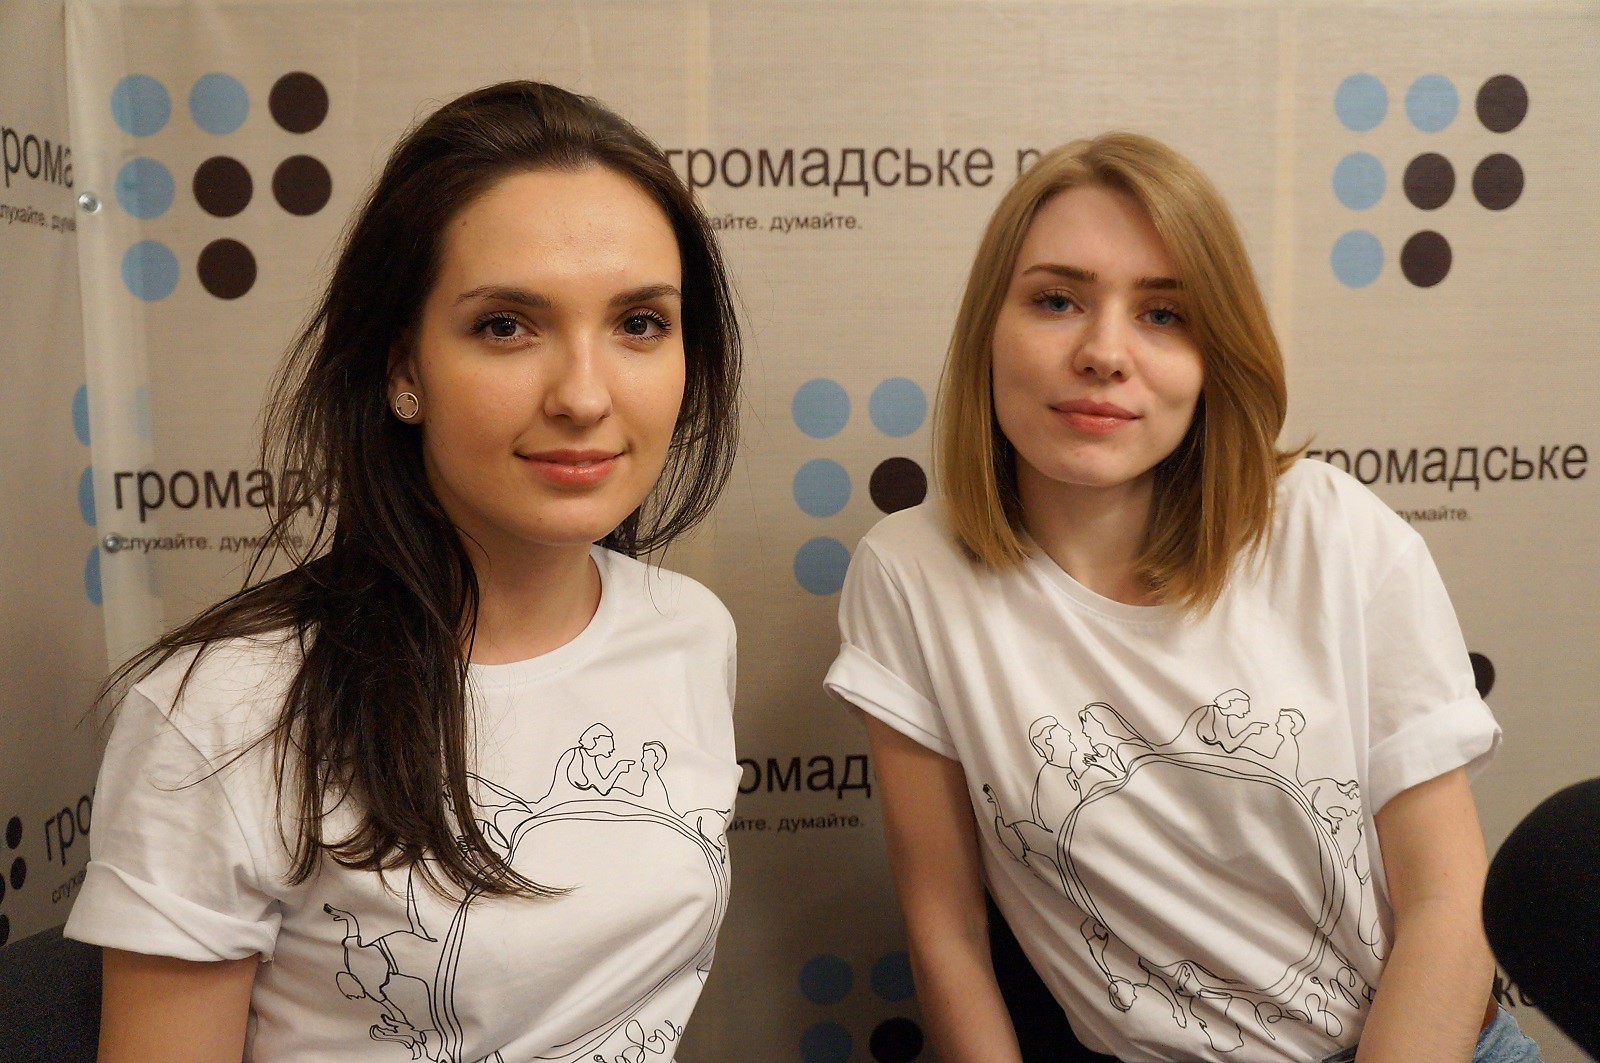 Дизайн проти насильства: у Києві нагородили переможницю конкурсу на найкращий принт для футболки